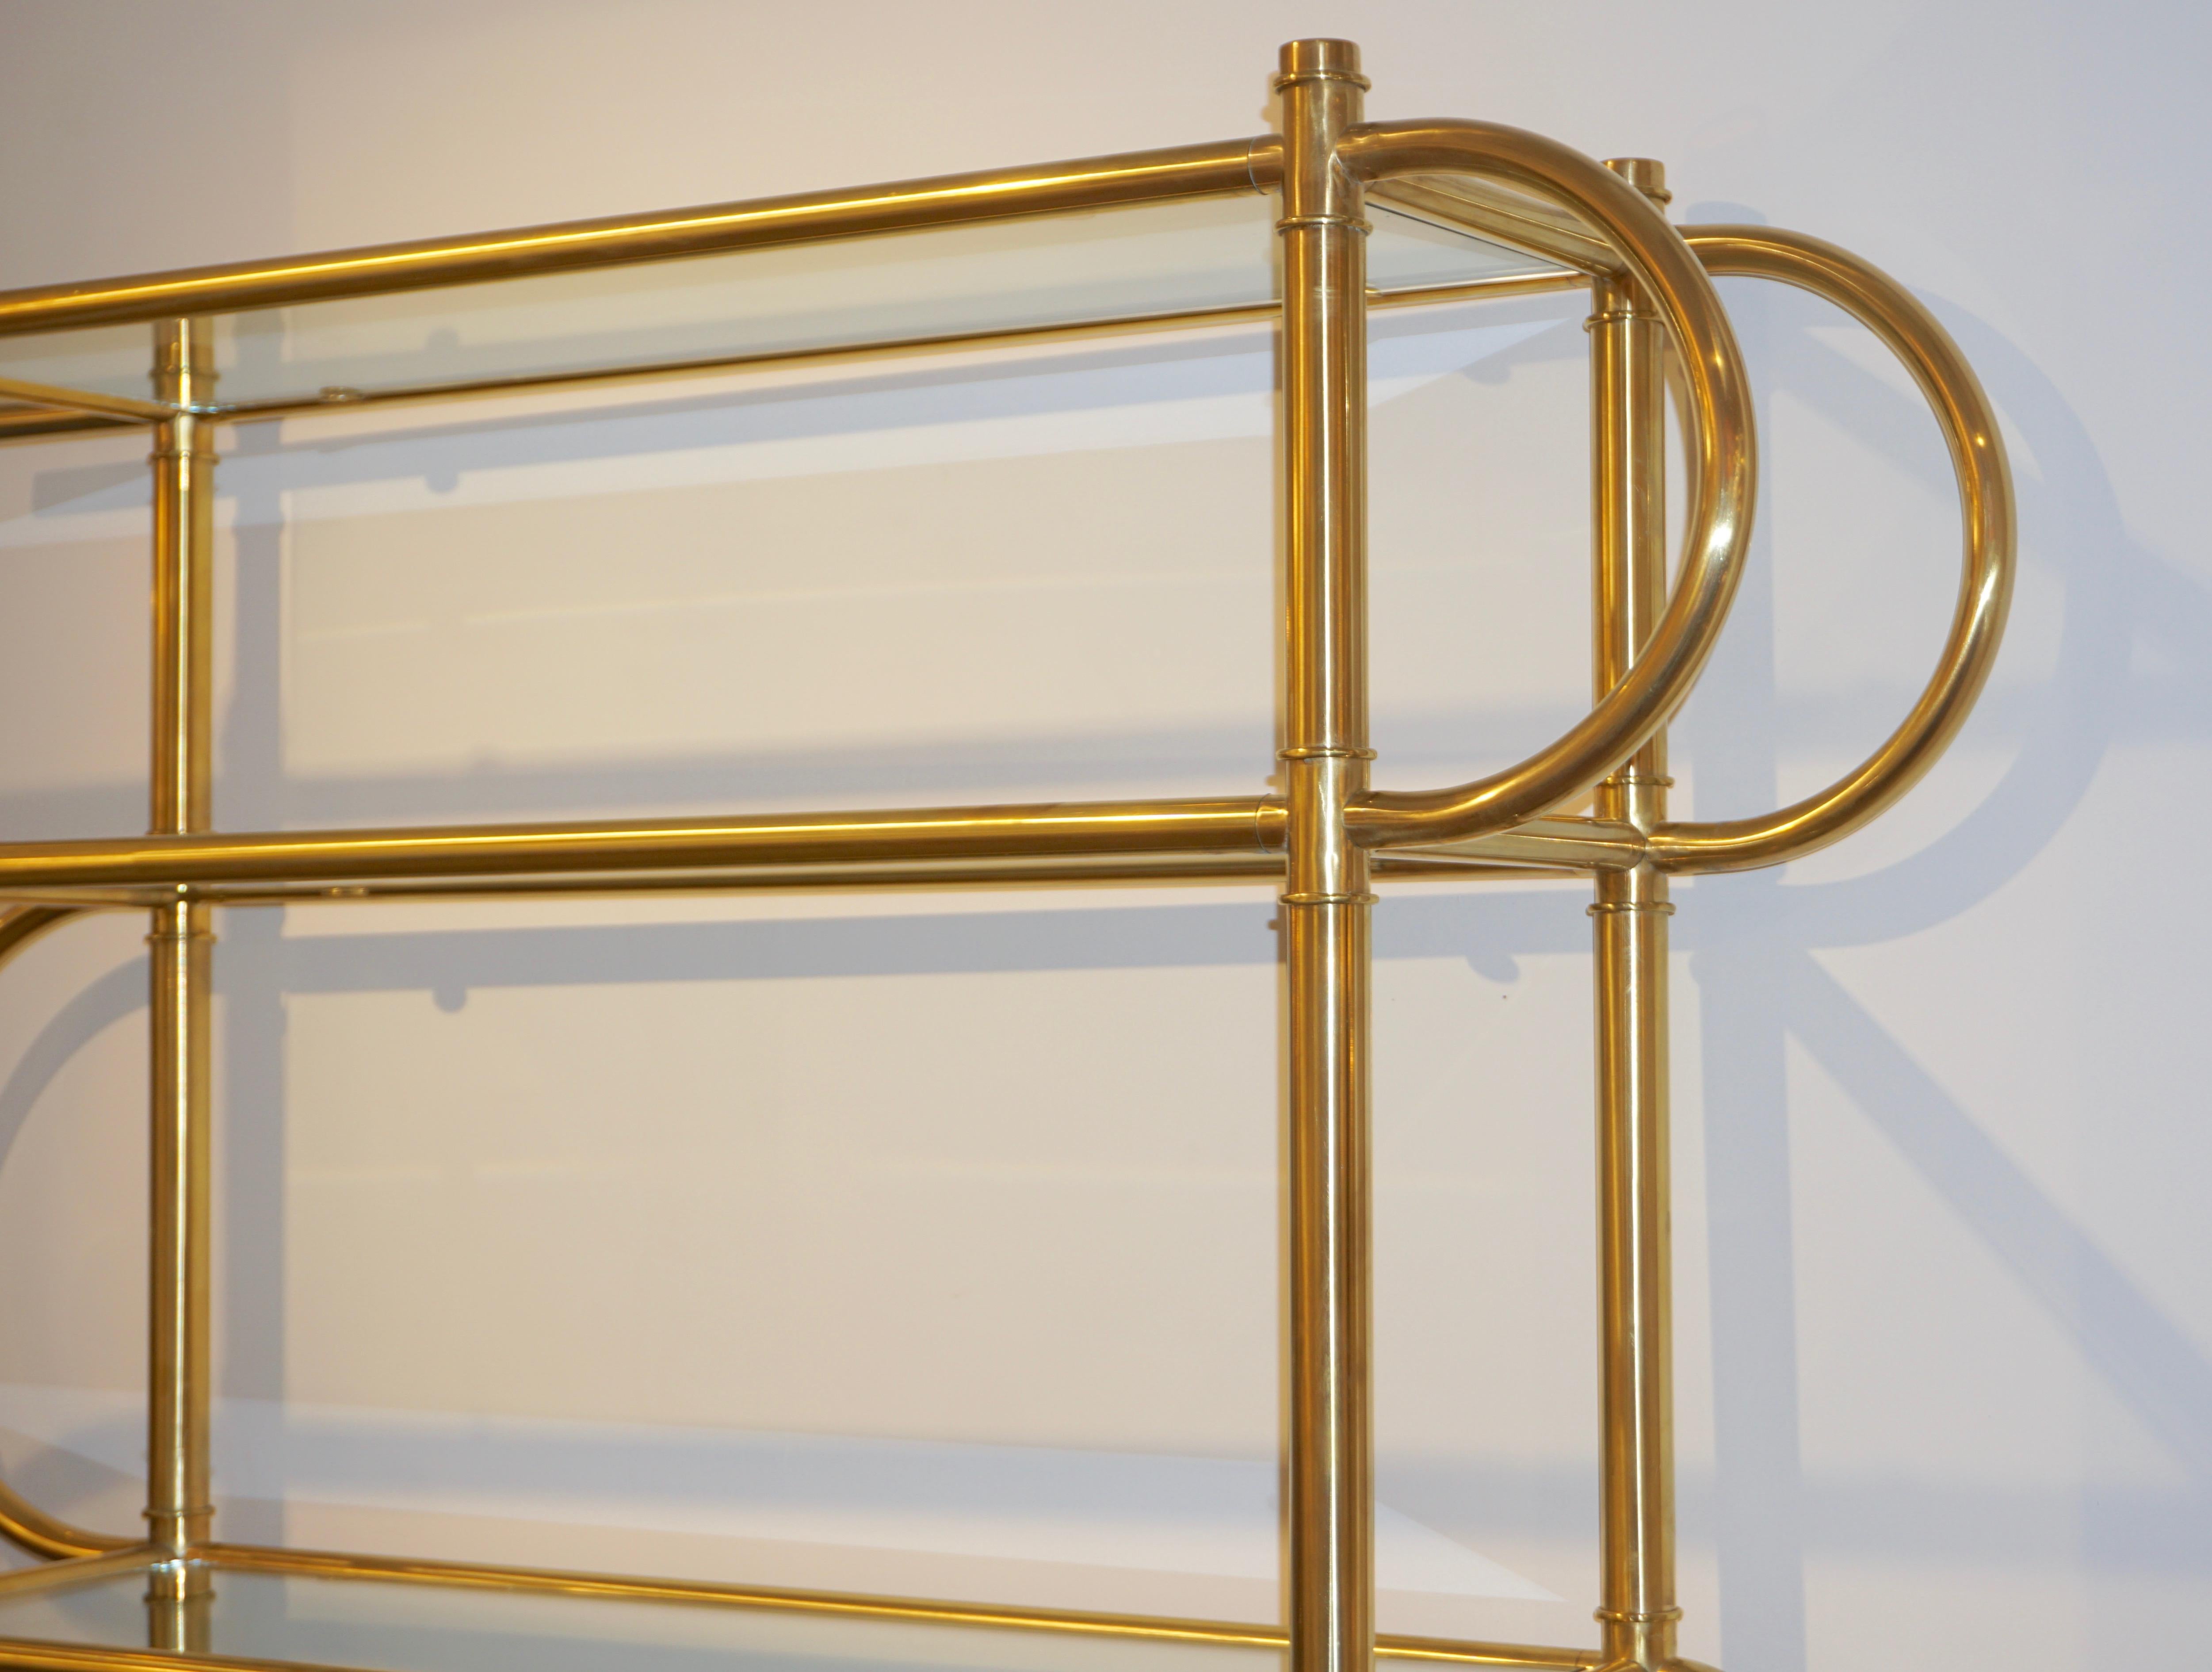 Organic Modern Italian Modern Gold Brass Tubular Shelving Unit Étagère on Black Lacquered Base For Sale